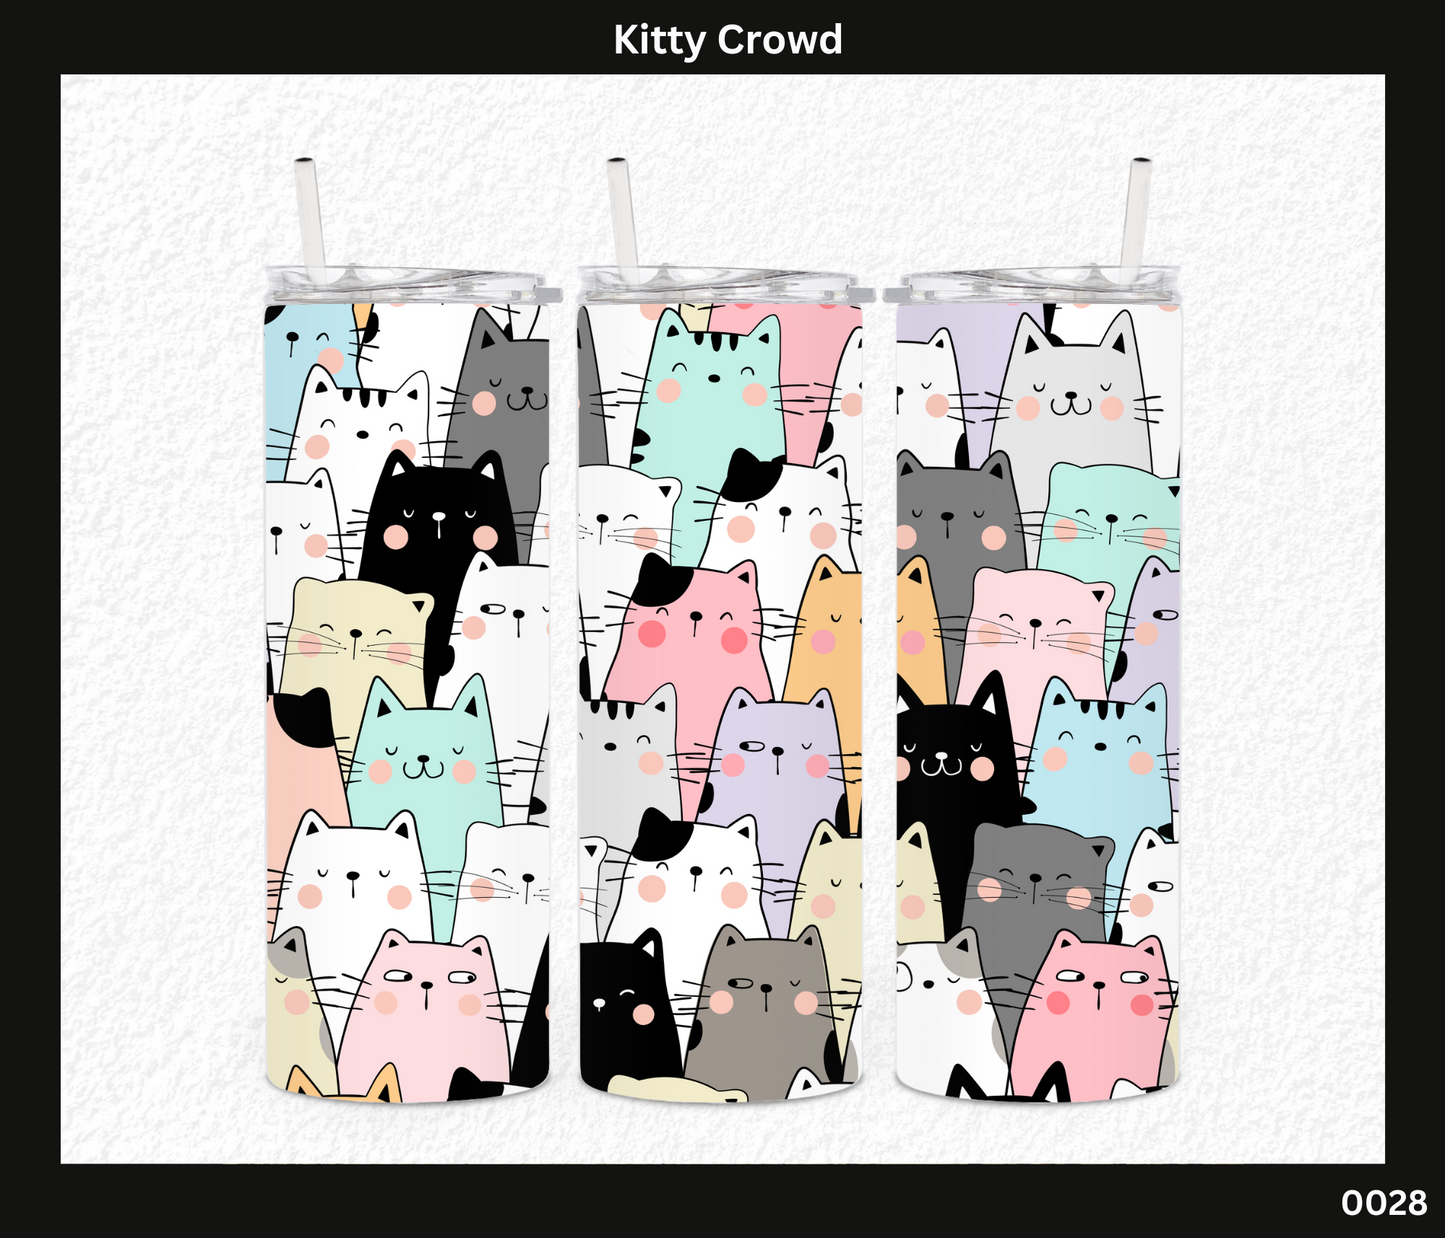 Kitty Crowd